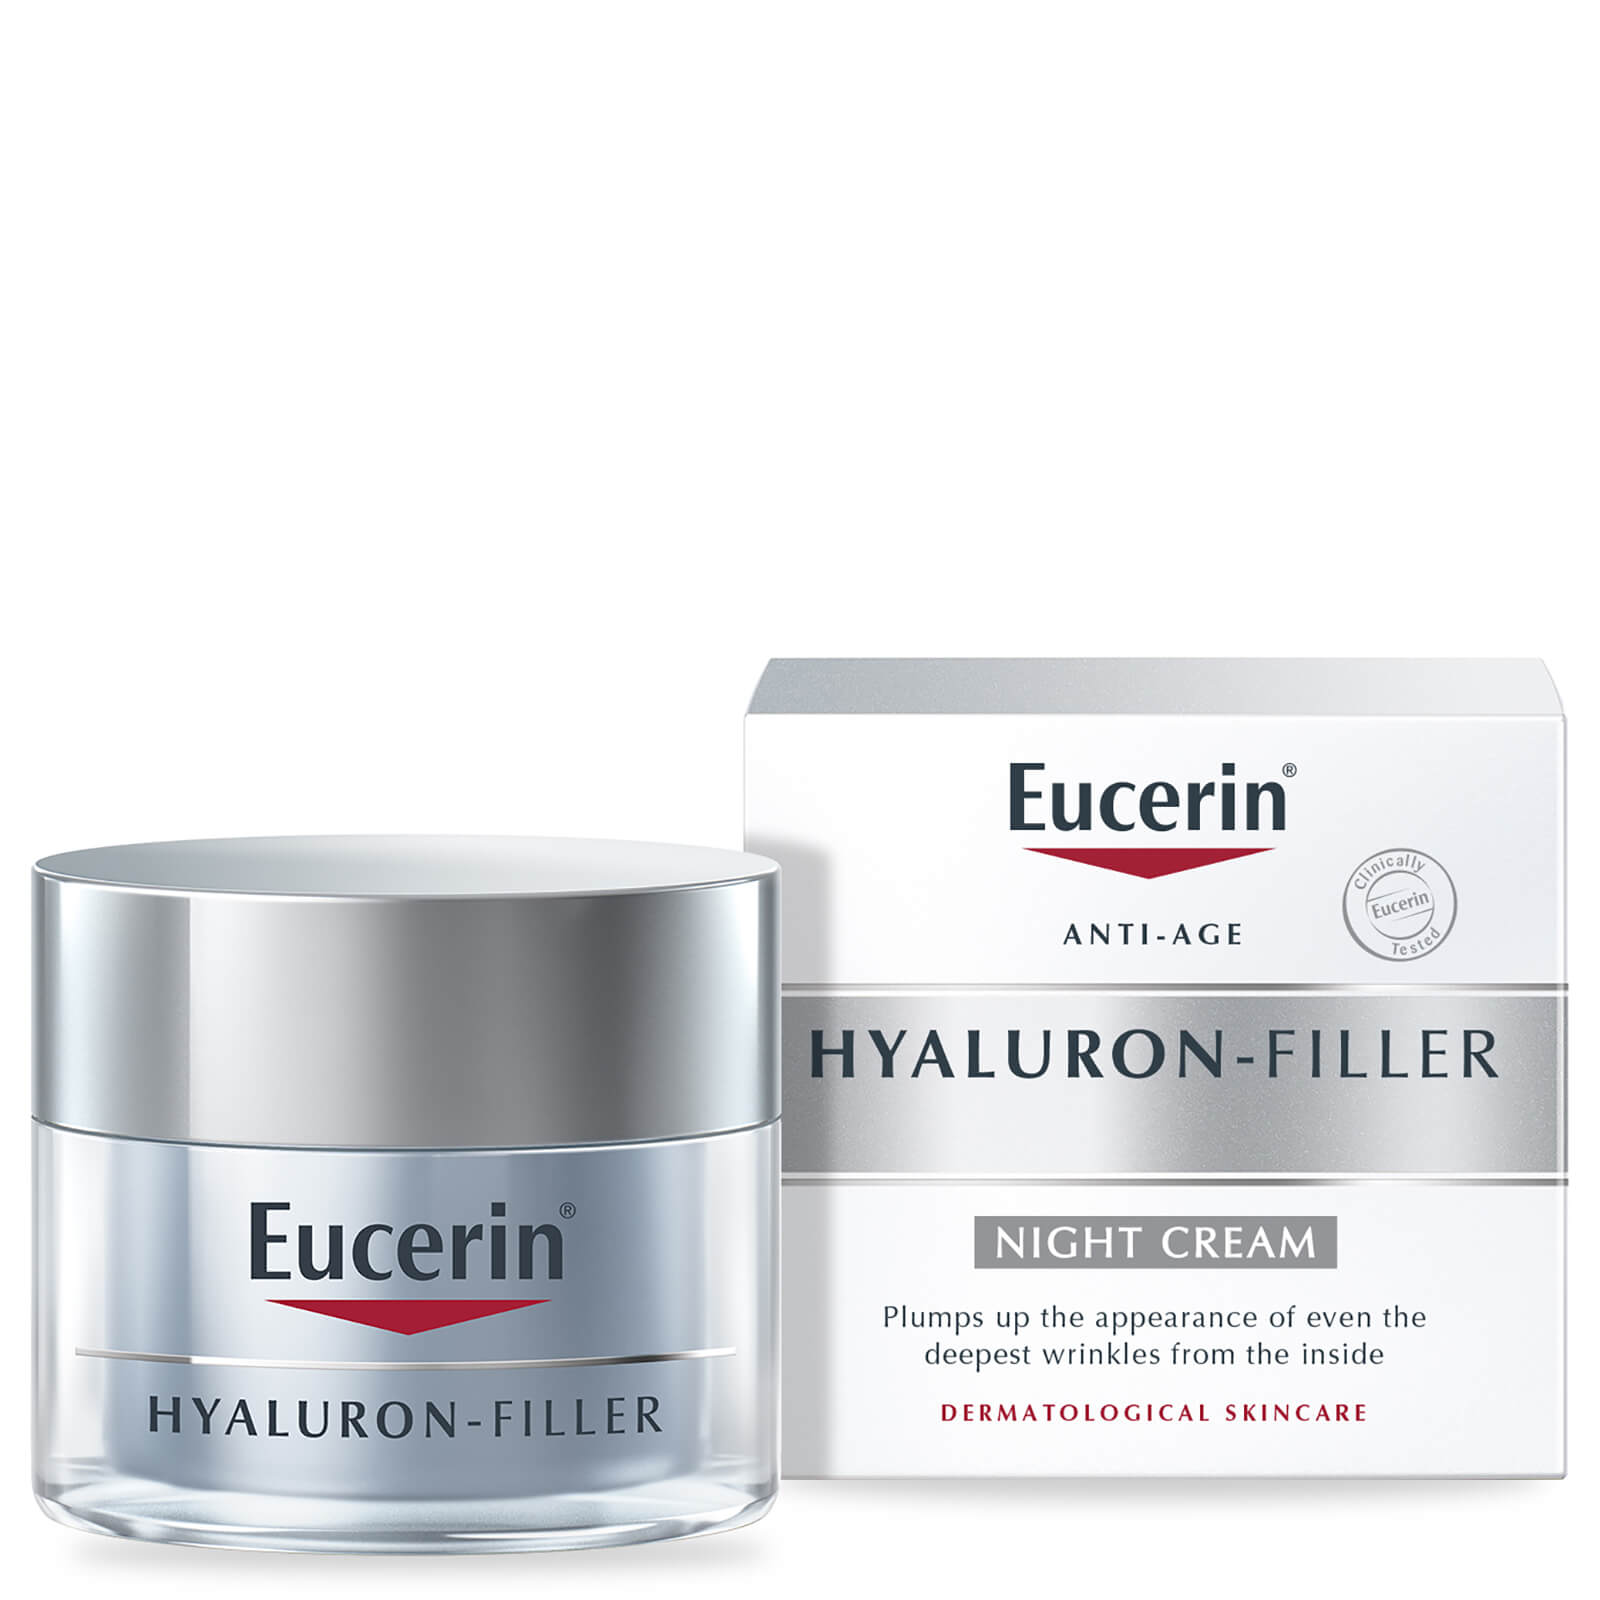 eucerin hyaluron filler anti age starter kit reviews